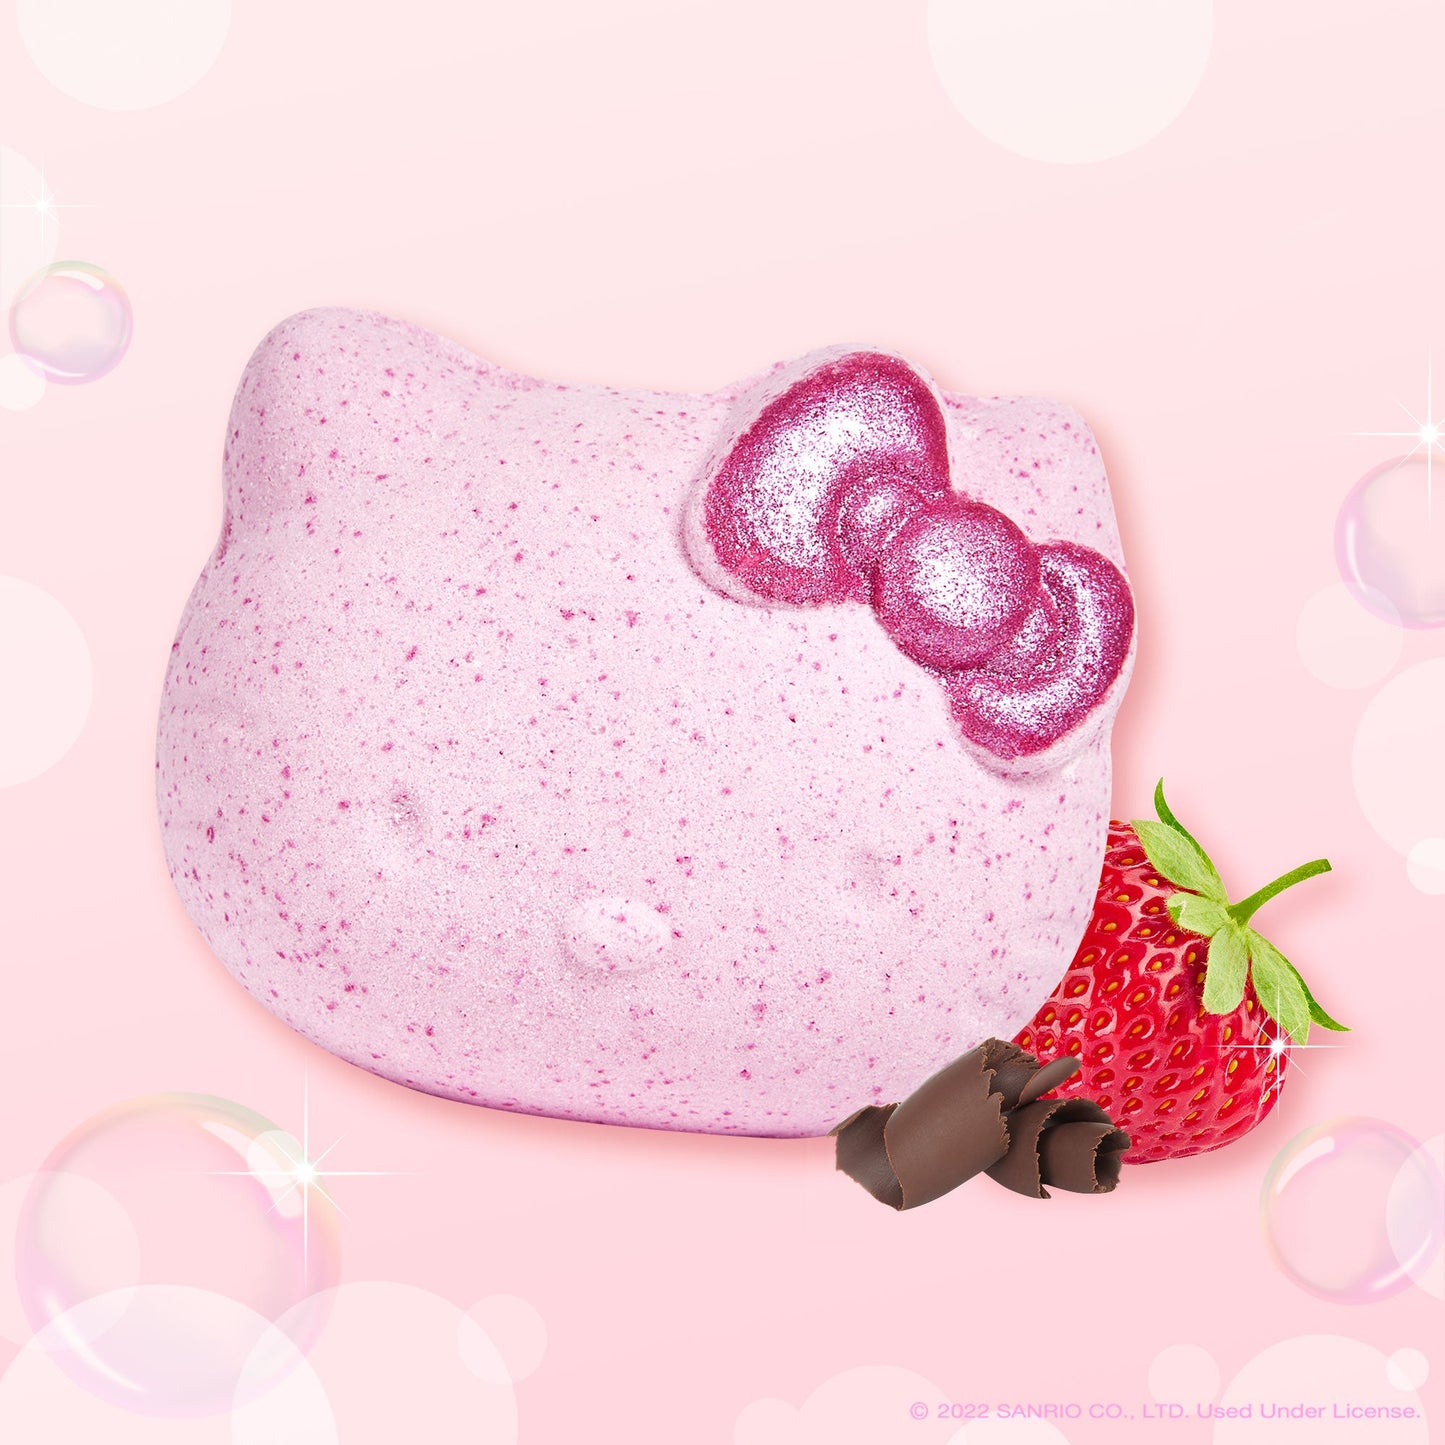 Hello Kitty 3D Aromatherapy Fizzy Bath Bomb - Strawberry Cocoa Bath Bombs - The Crème Shop x Sanrio 